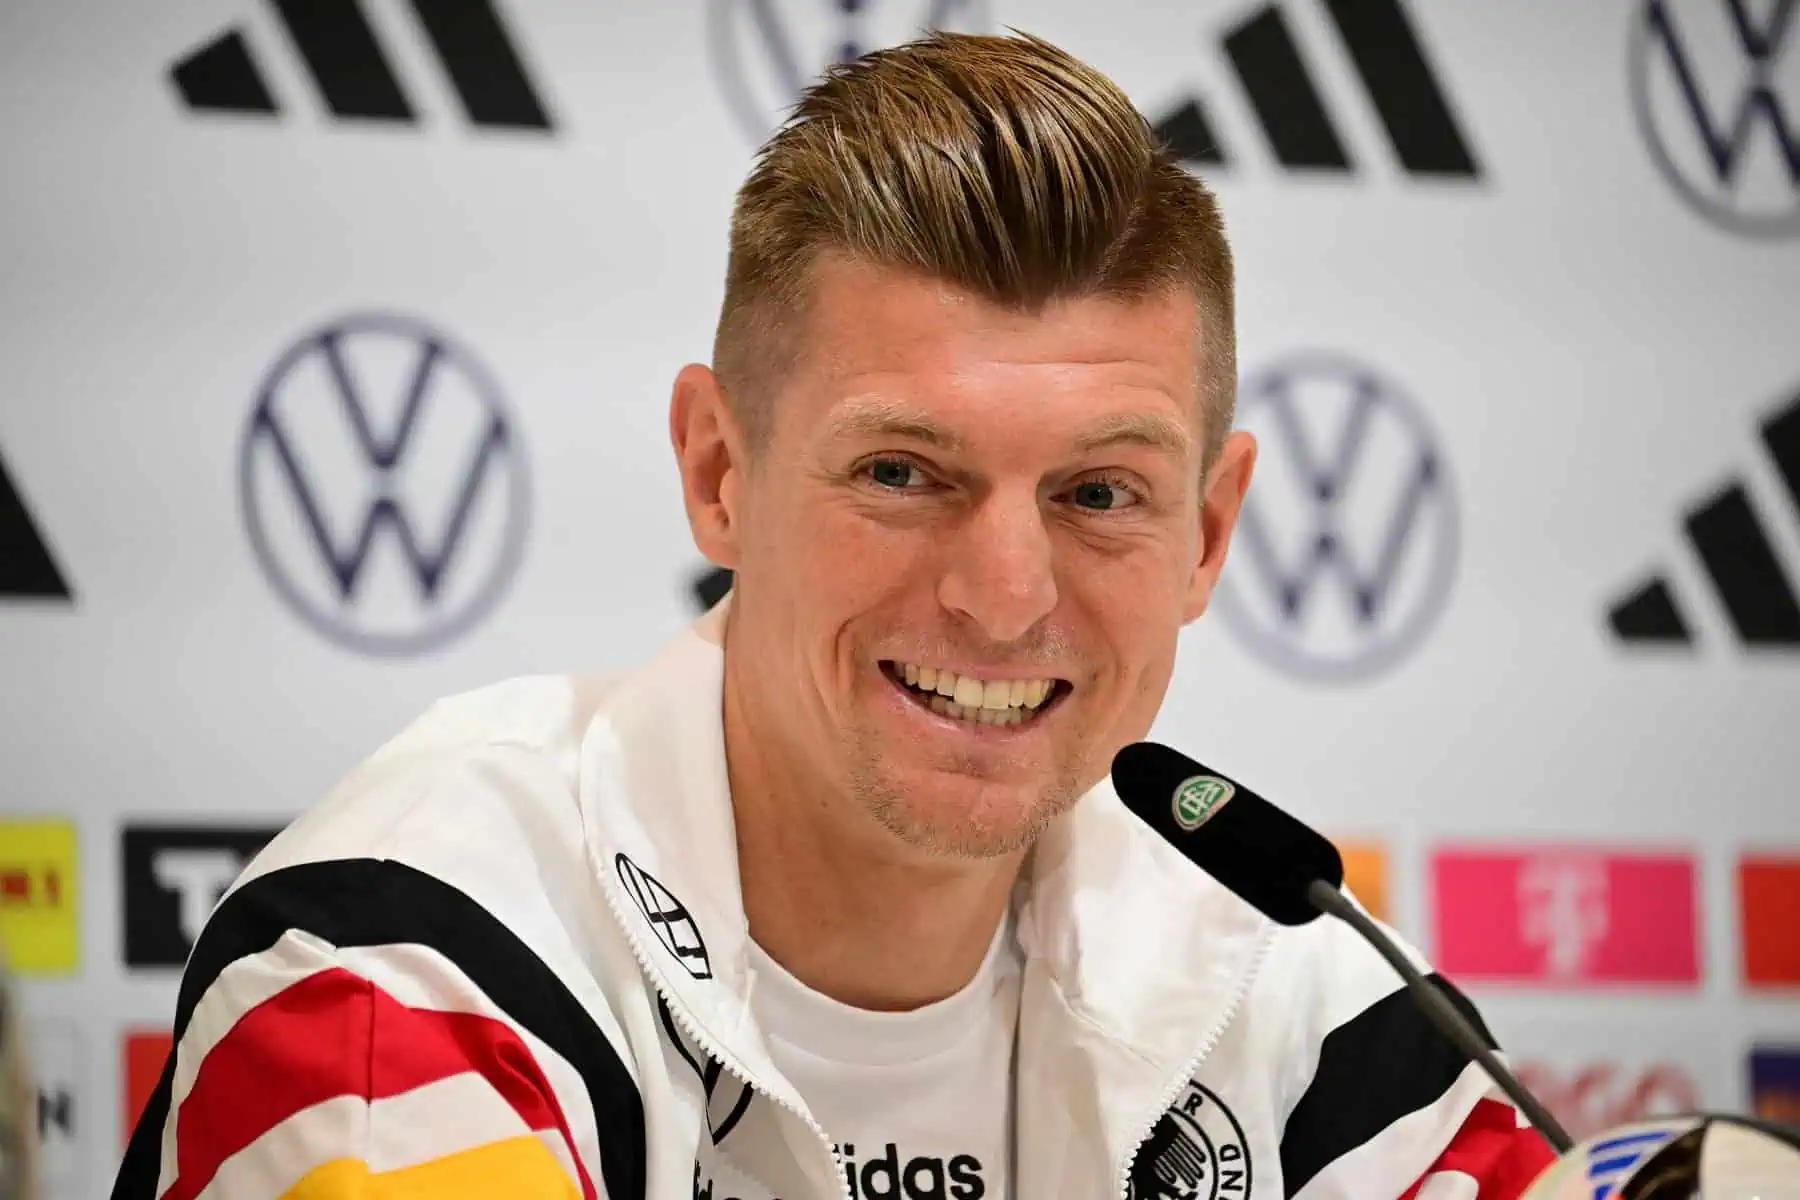 Belief returns for Kroos and Germany before Spain showdown